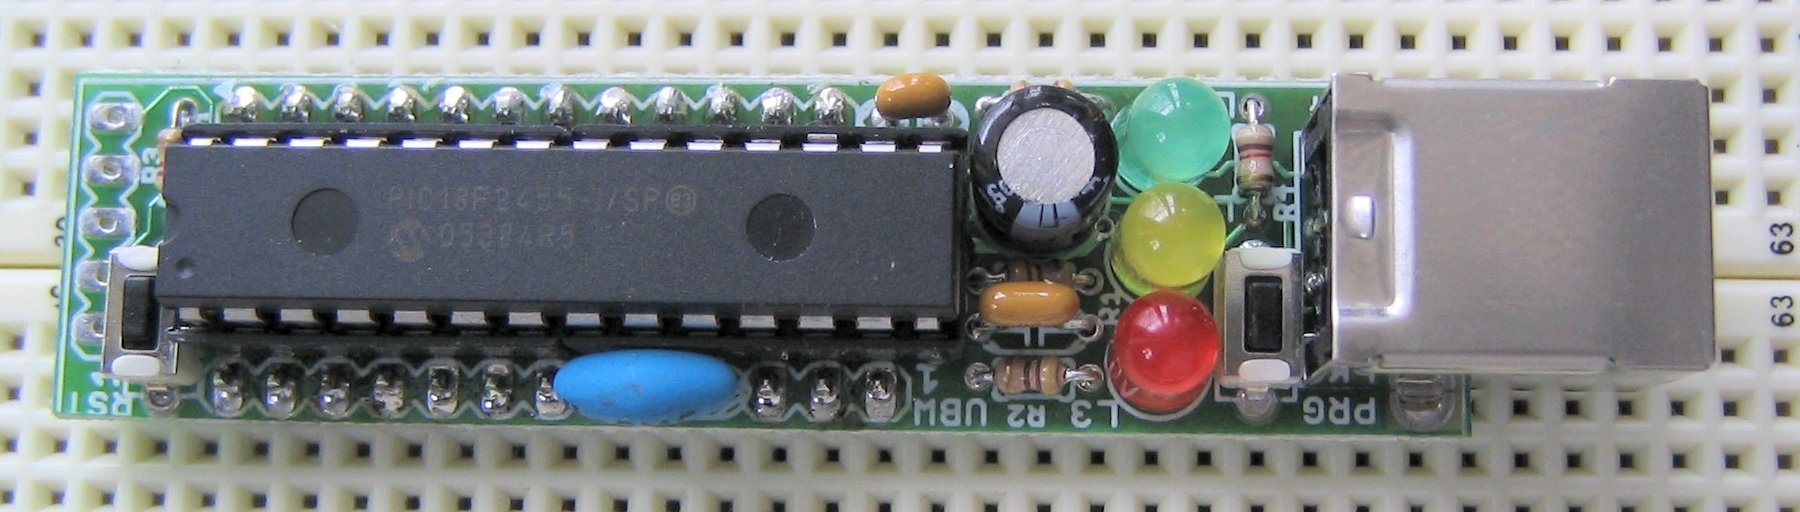 USB Bit Whacker - Simple USB input / output device